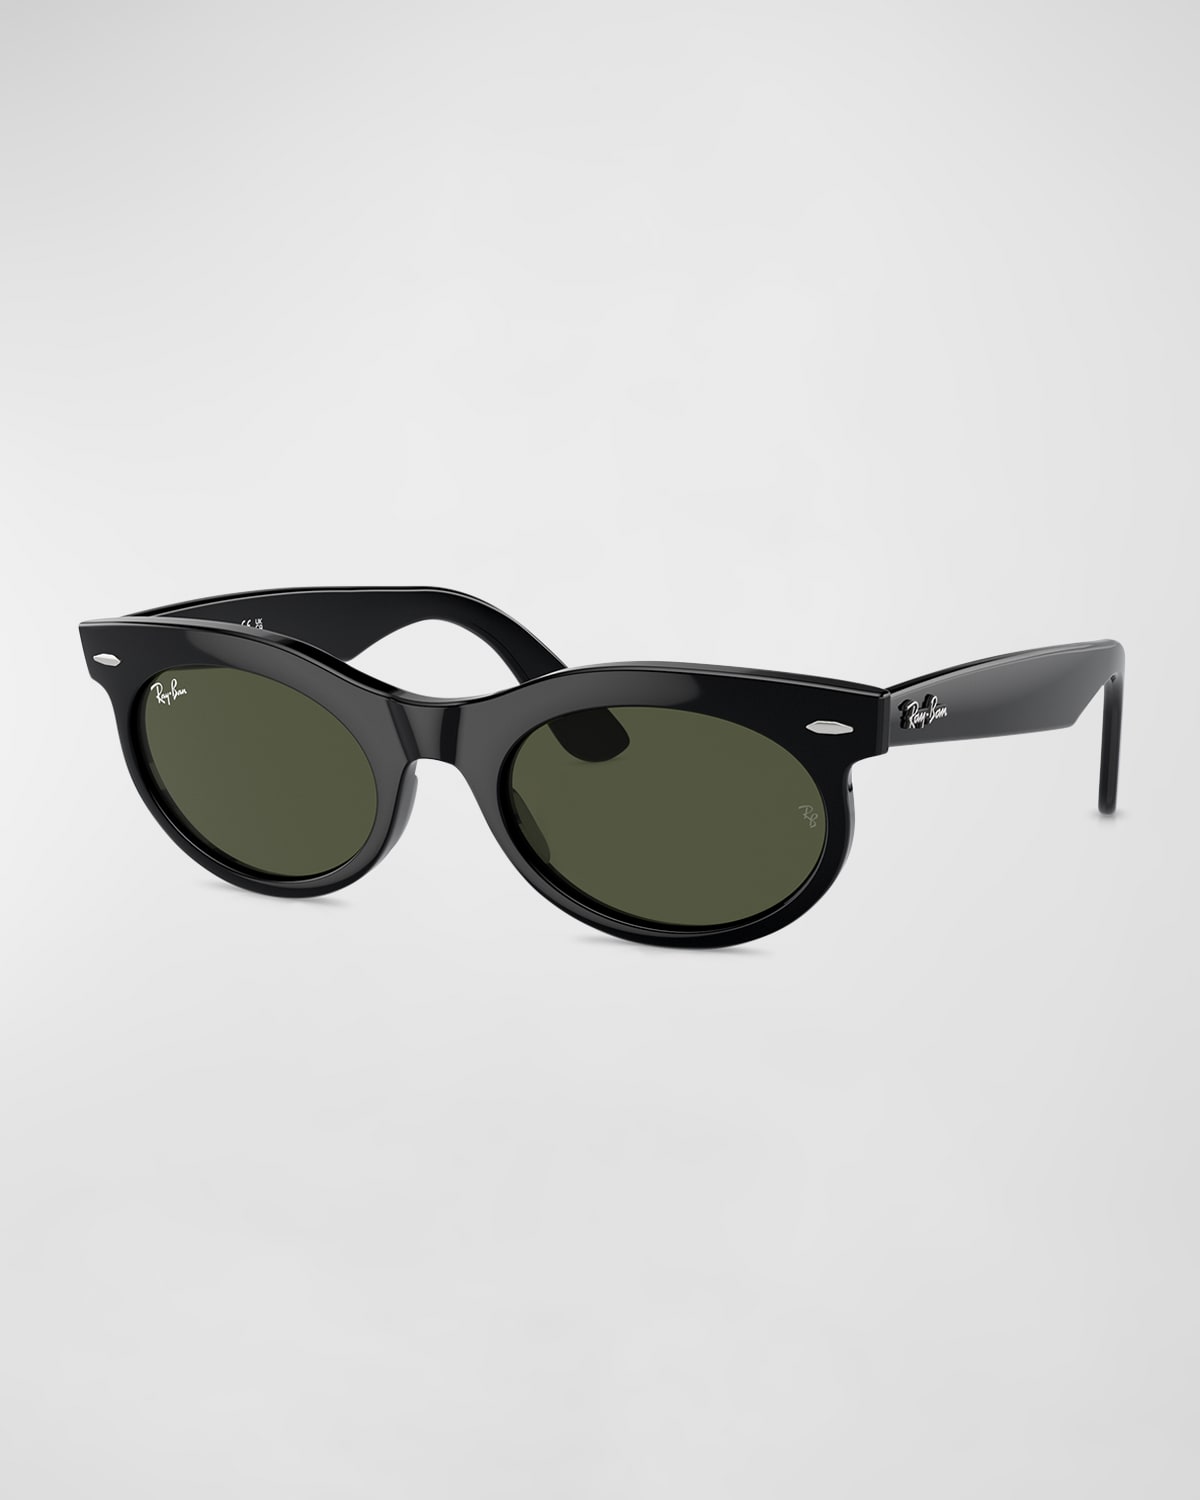 Ray Ban Wayfarer Oval Propionate Sunglasses, 53mm In Black